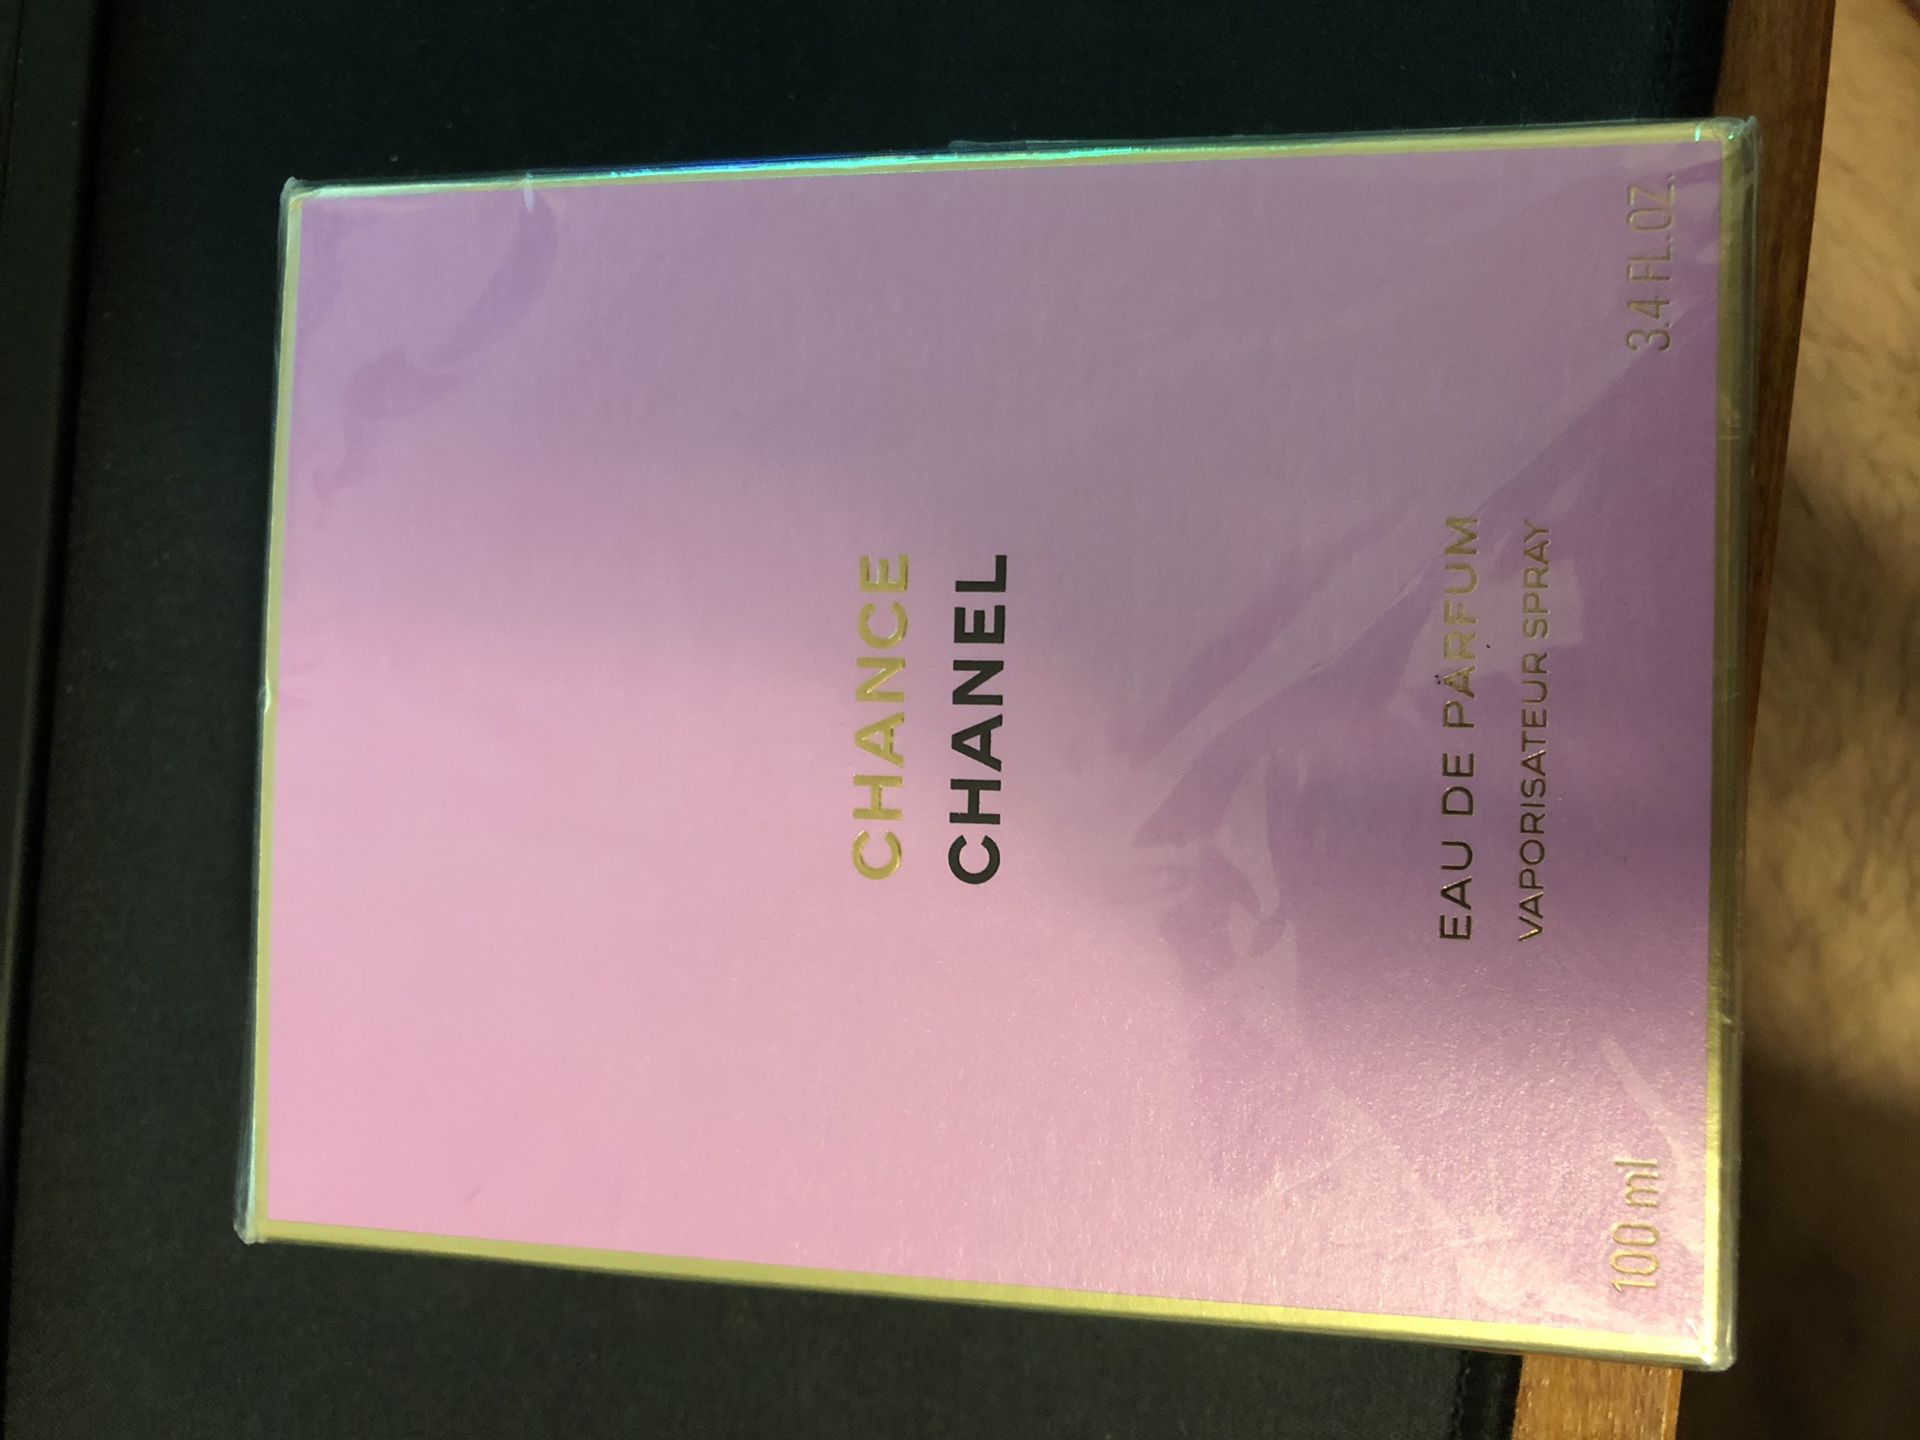 Chanel women’s perfume